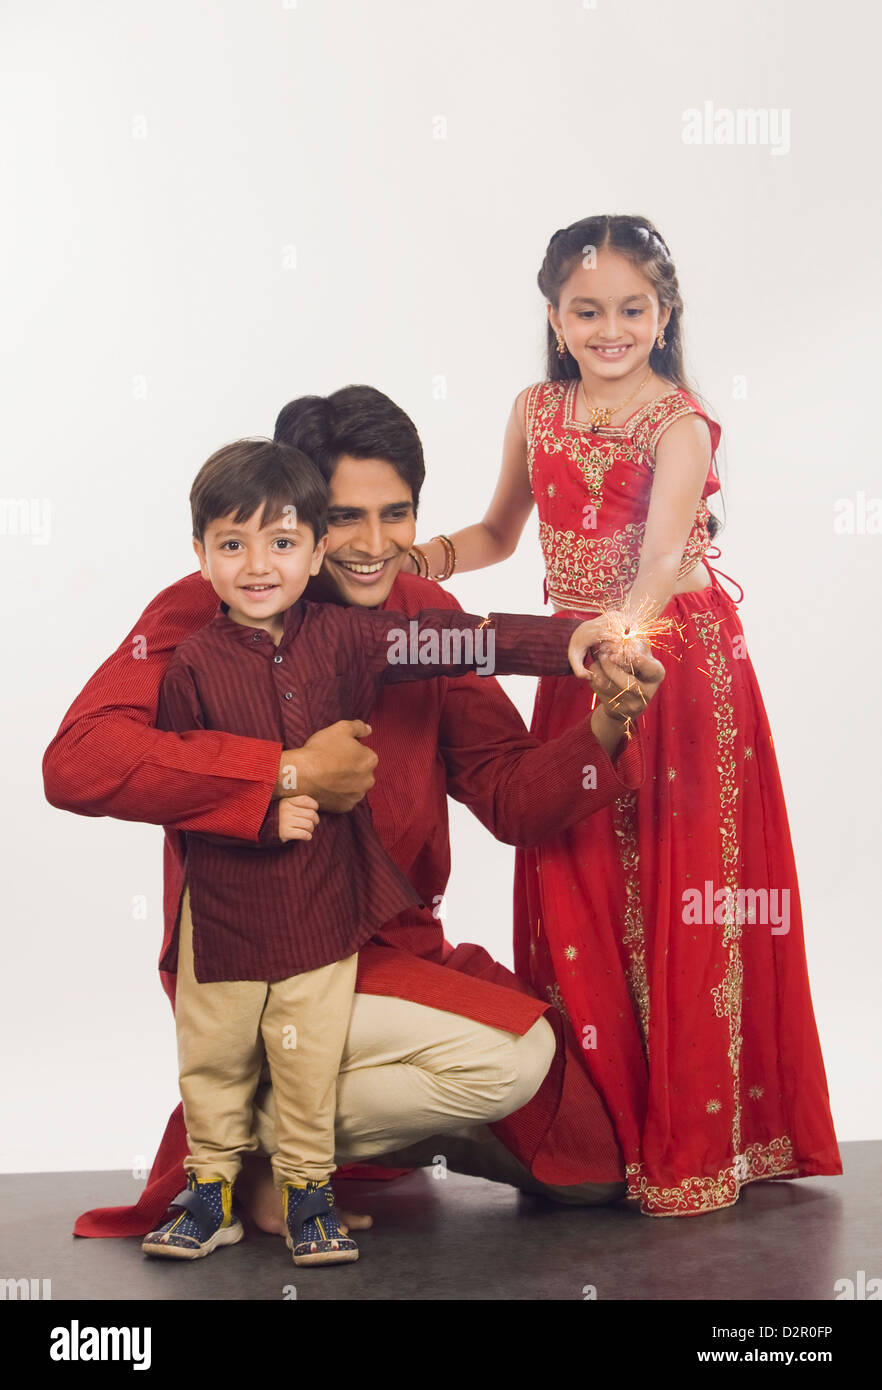 Father and children celebrating Diwali Stock Photo